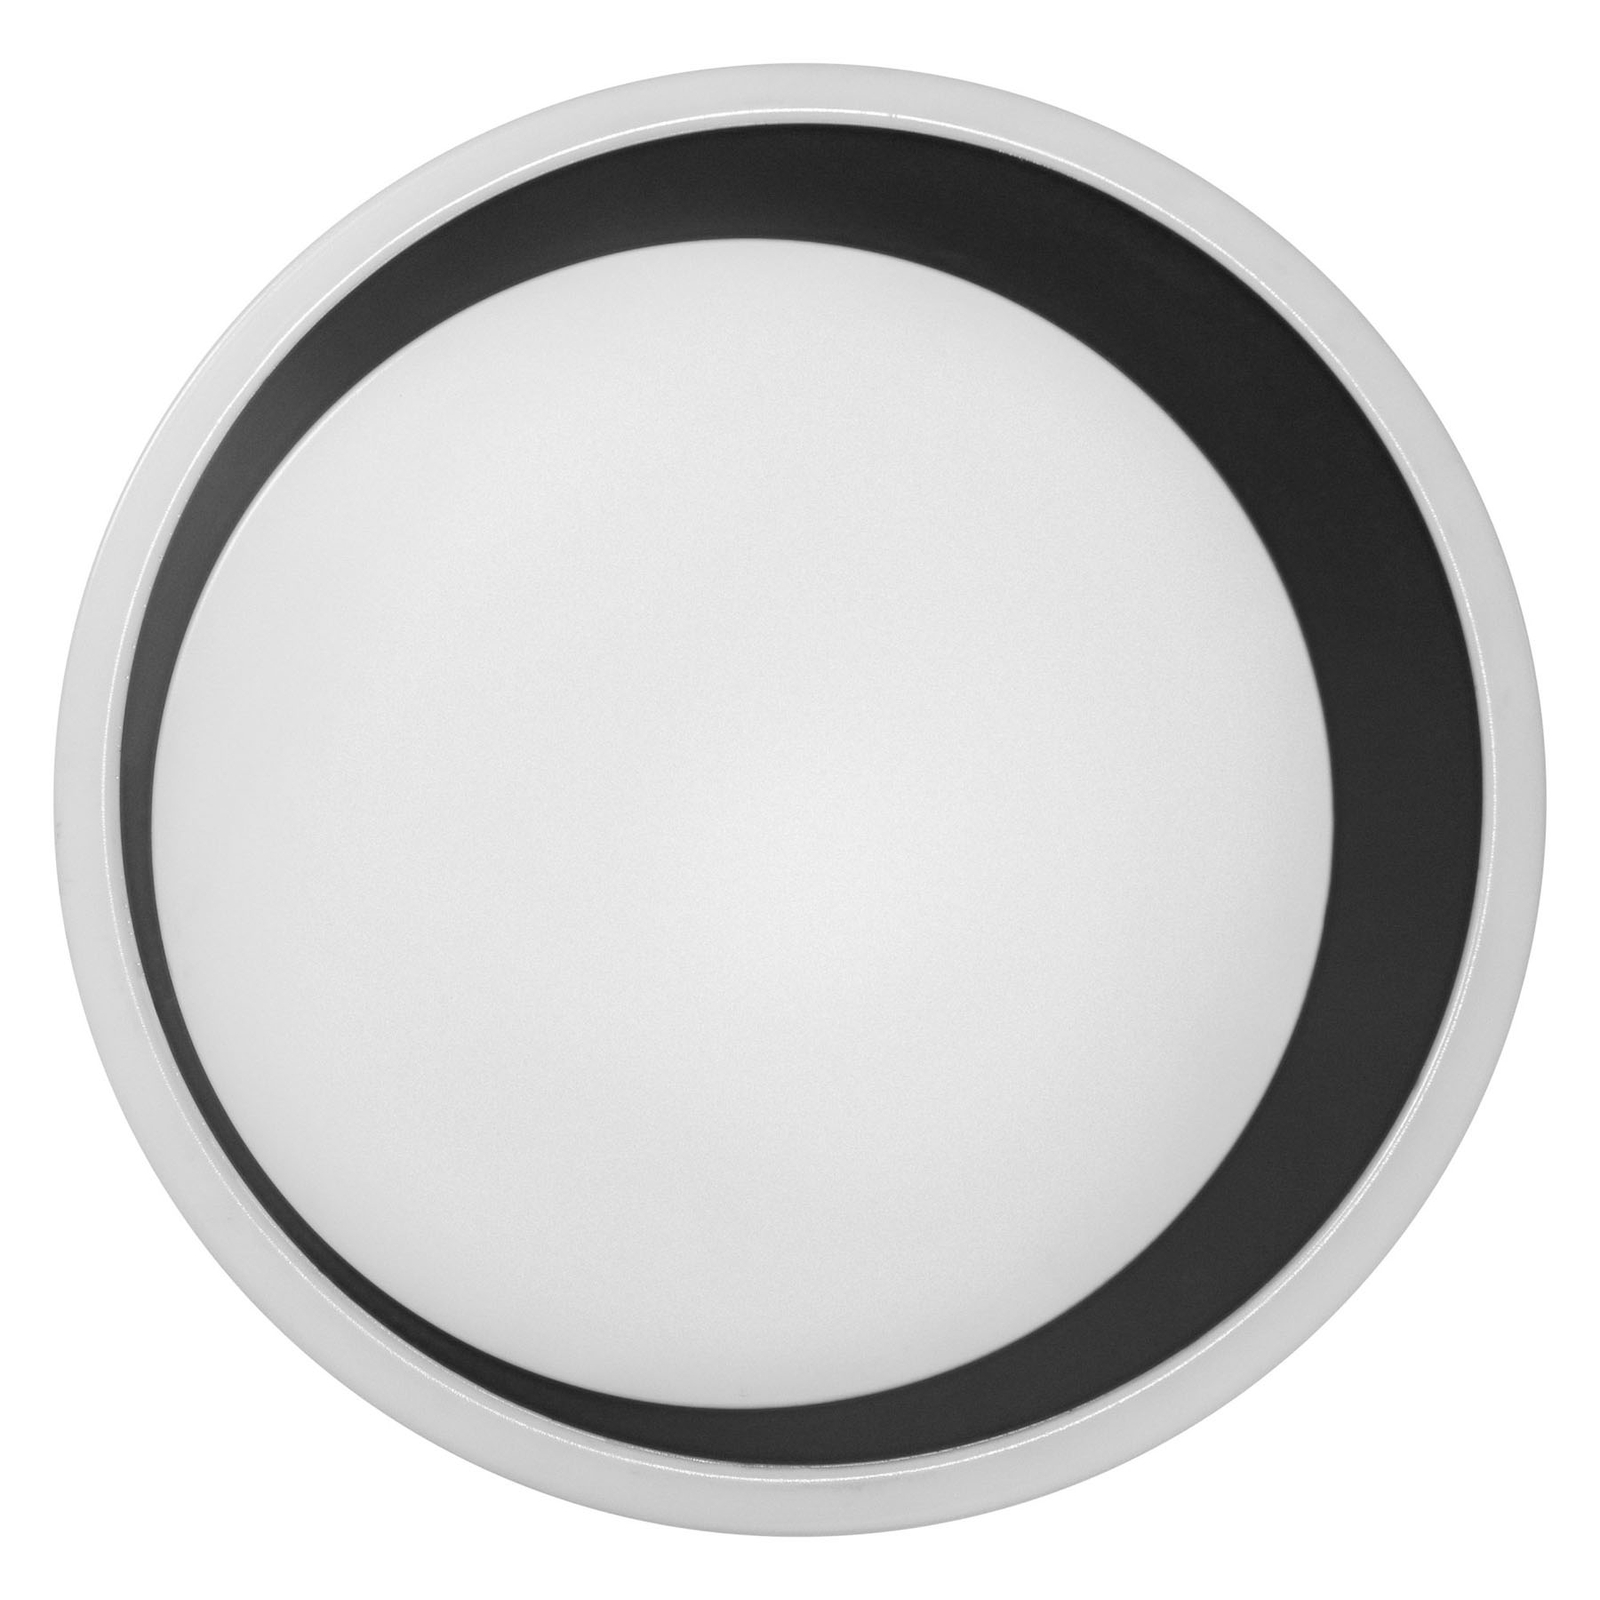 LEDVANCE SMART+ WiFi Orbis Moon CCT 48cm czarna